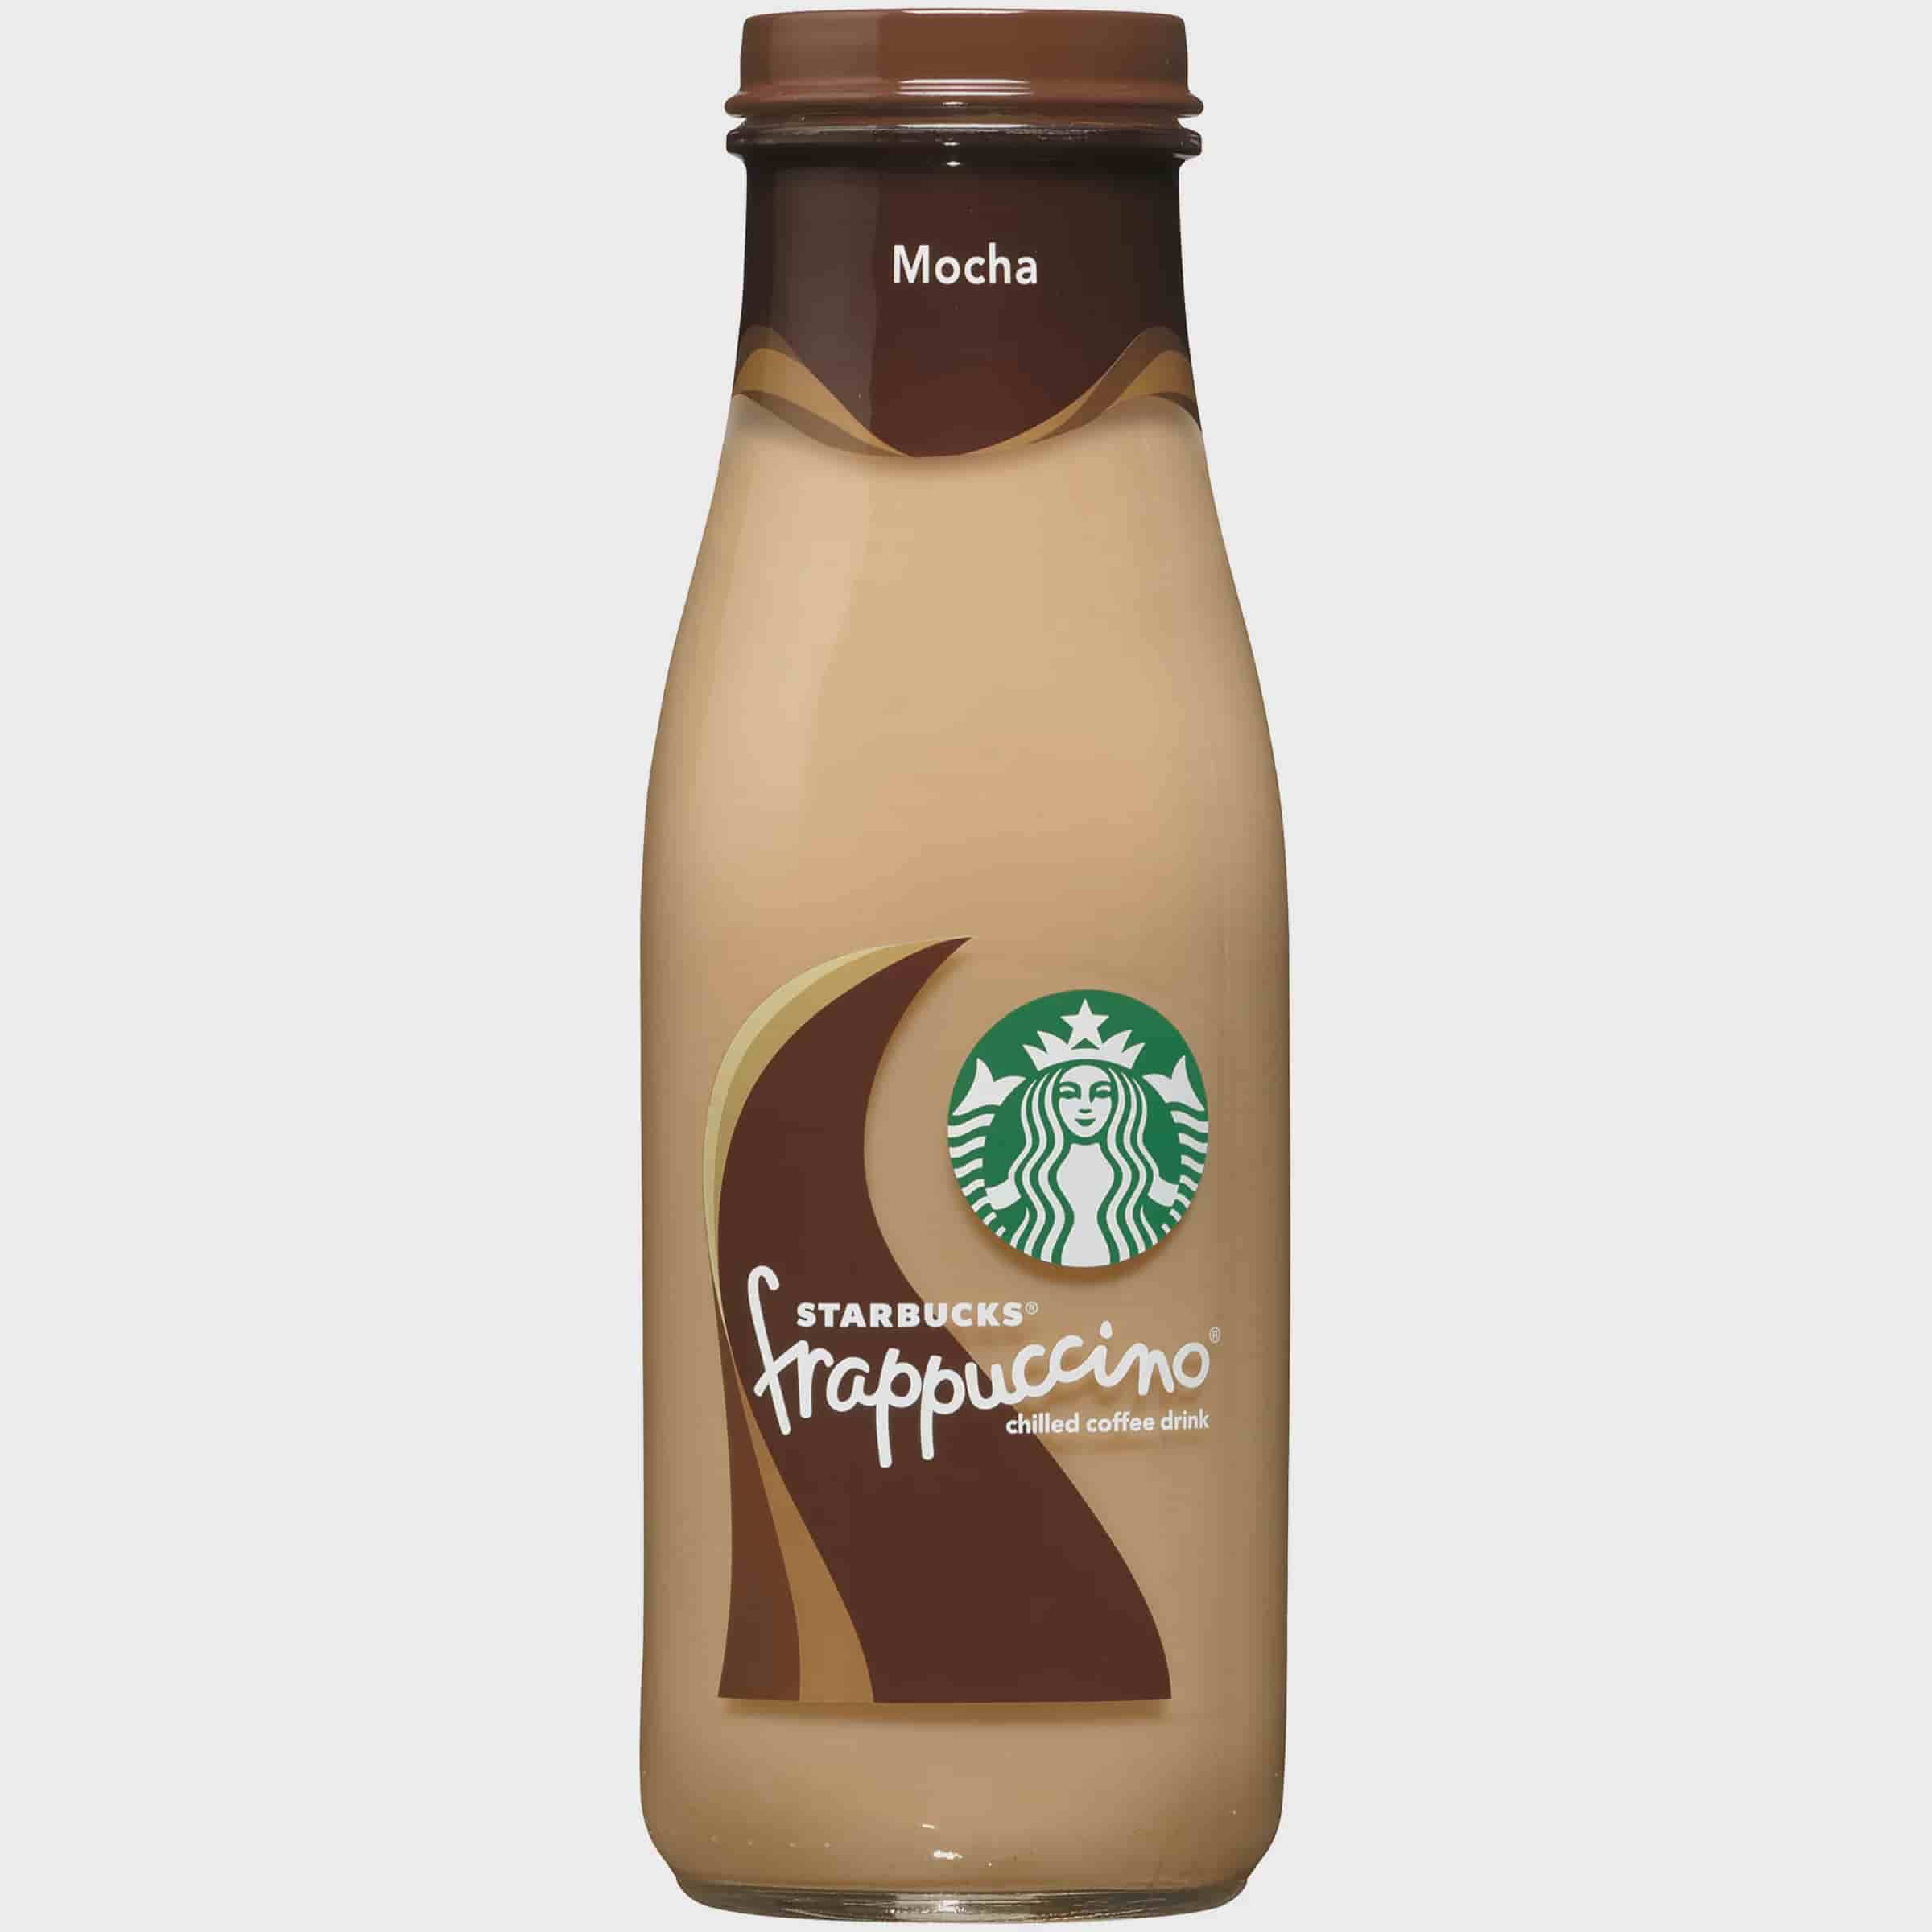 Starbucks Frappuccino Coffee Drink - Mocha, 405ml